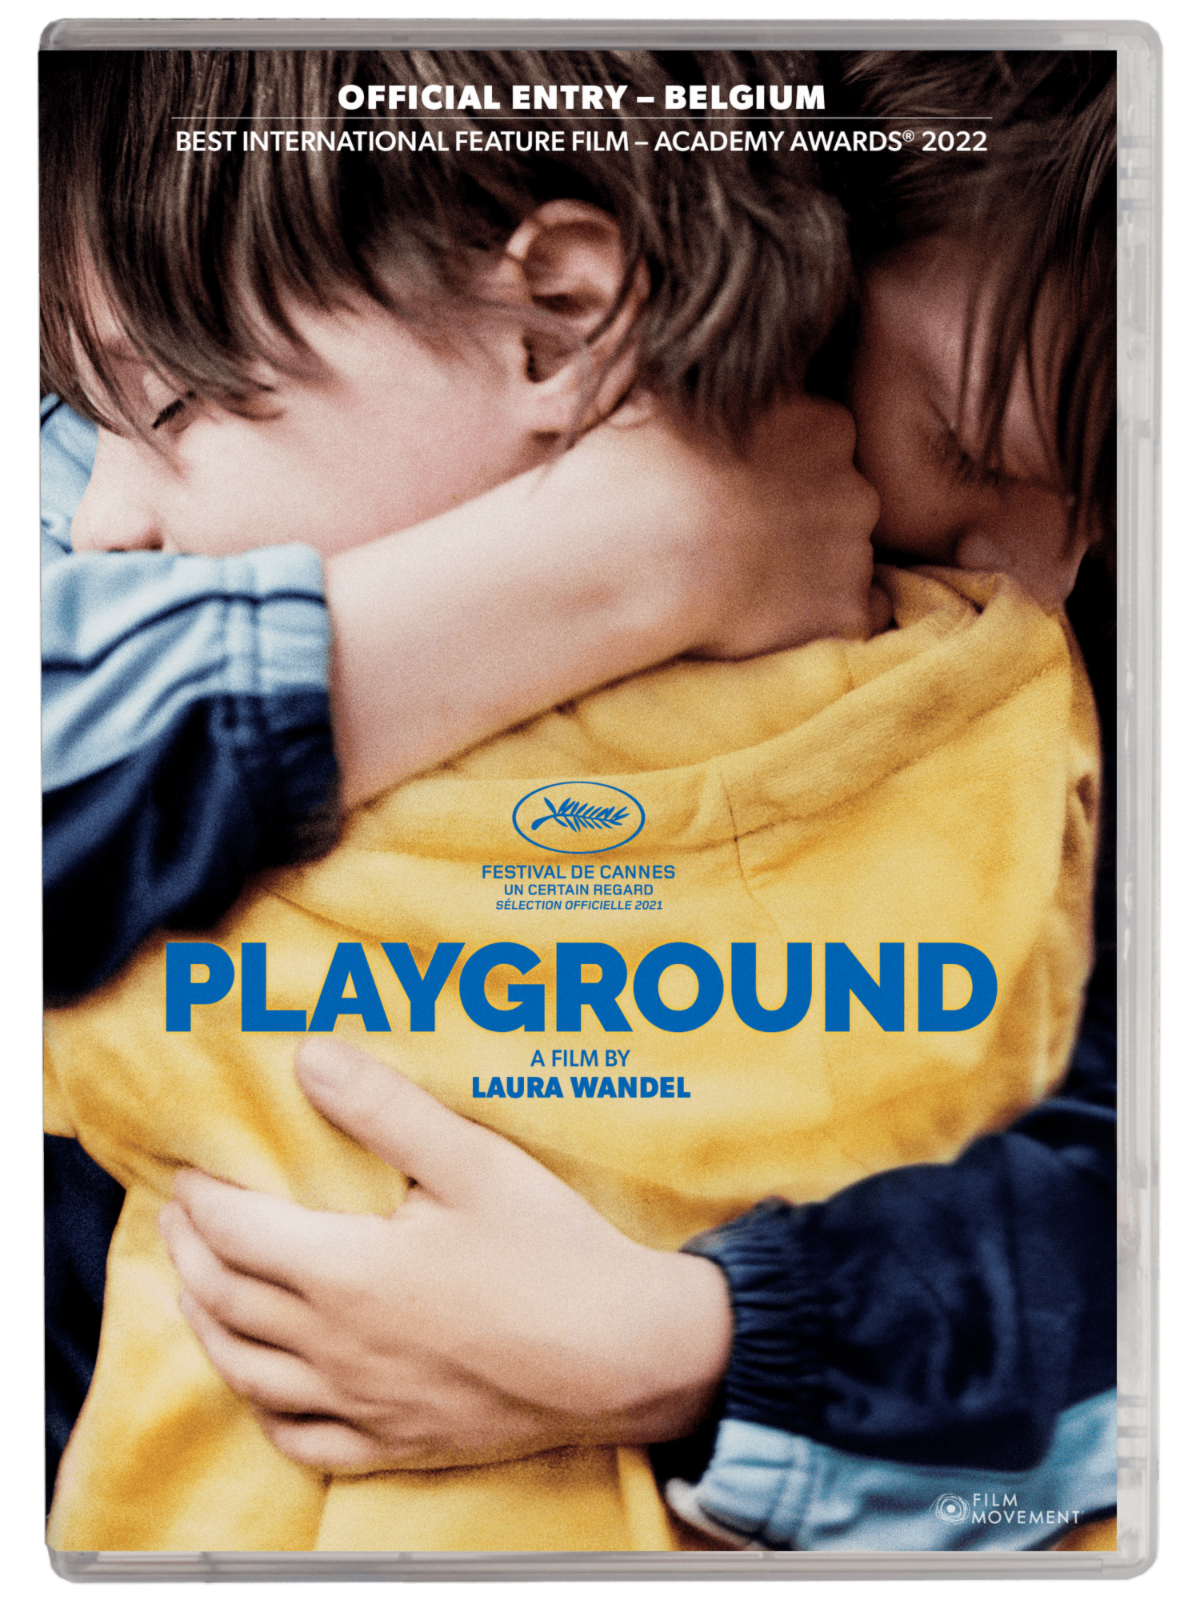 Belgium 'Playground' Arrives on Digital, Disc May 10